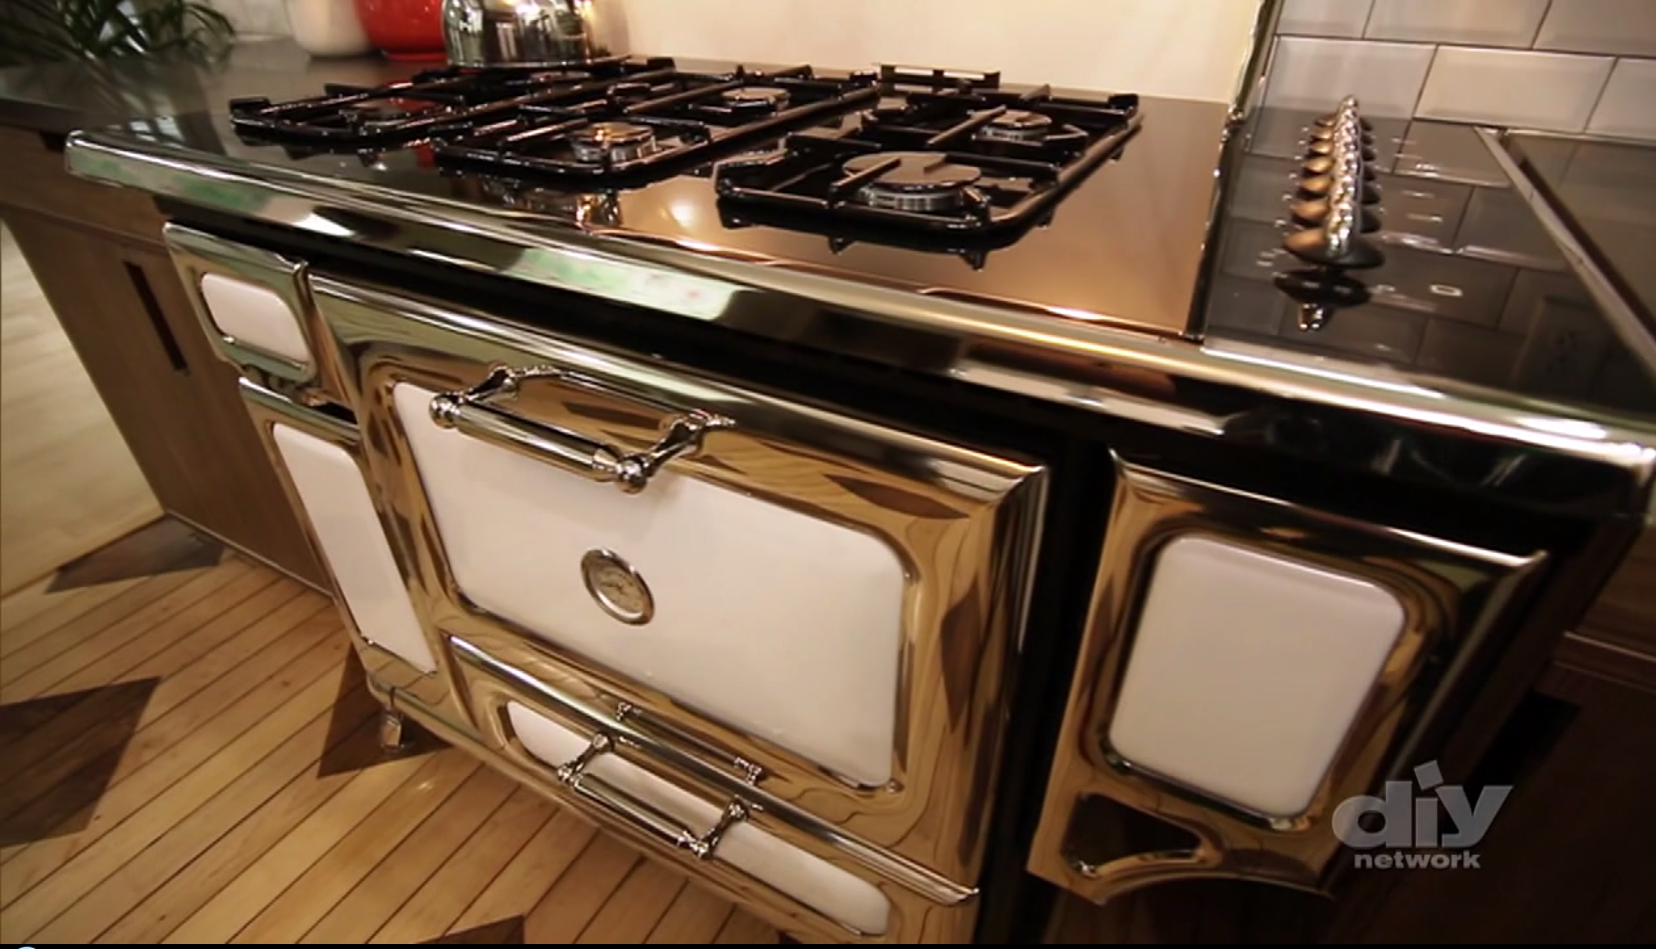 DIY Network Features Heartland Kitchen Appliances on 